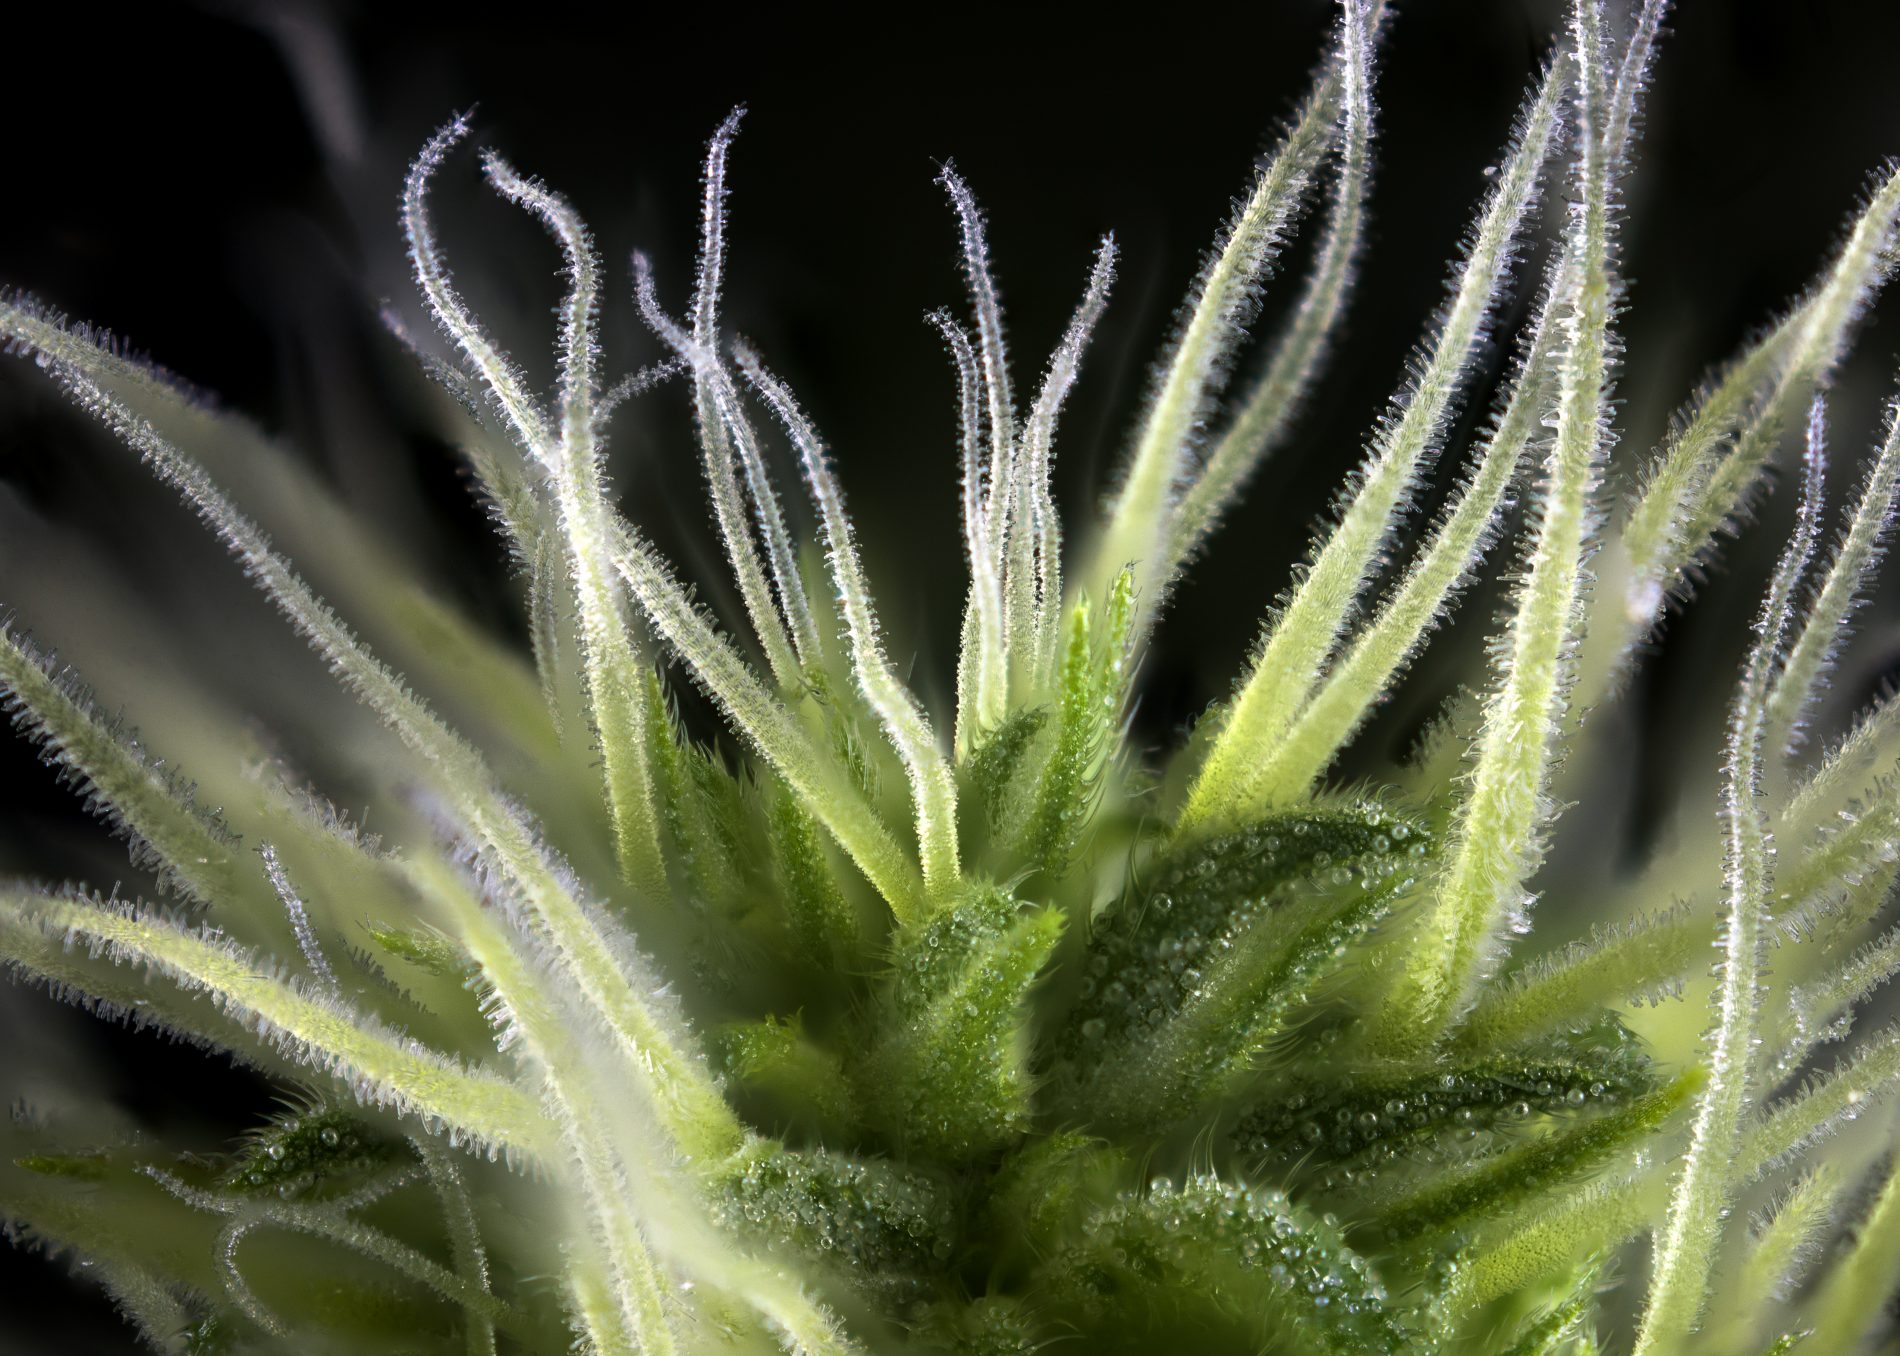 Abstract macro detail of cannabis bud